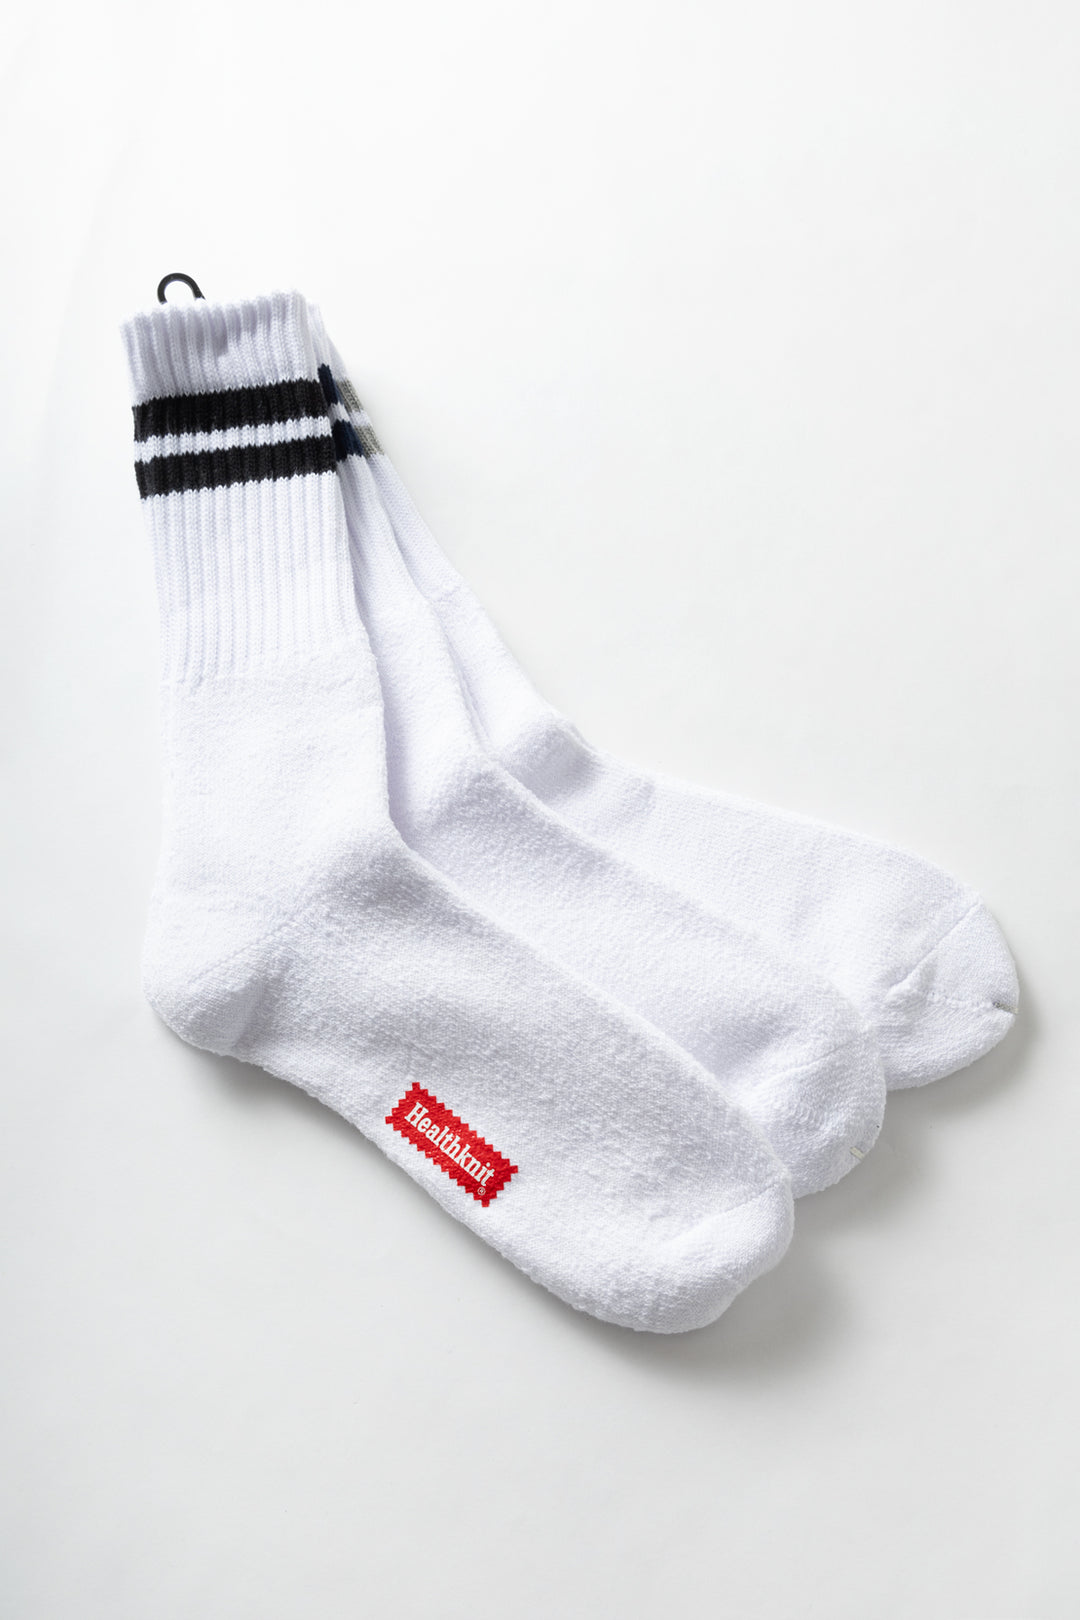 Healthknit white multi (black, navy, grey) sock